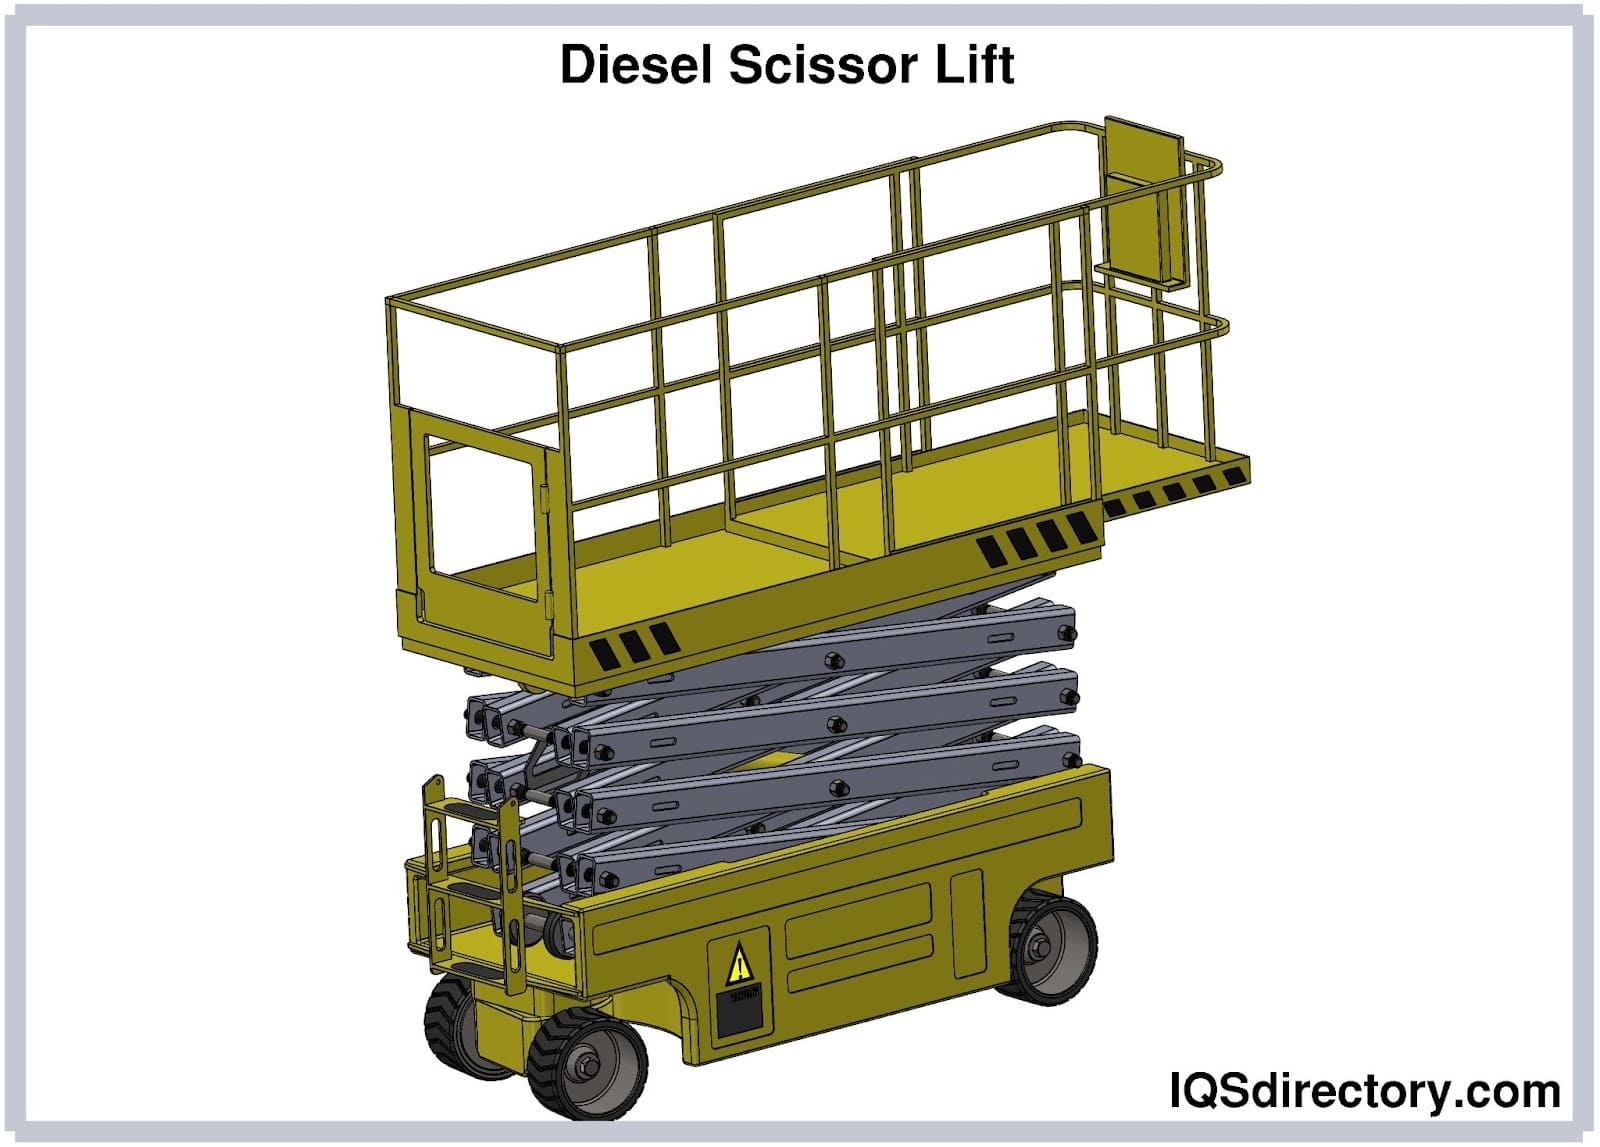 Diesel Scissor Lift